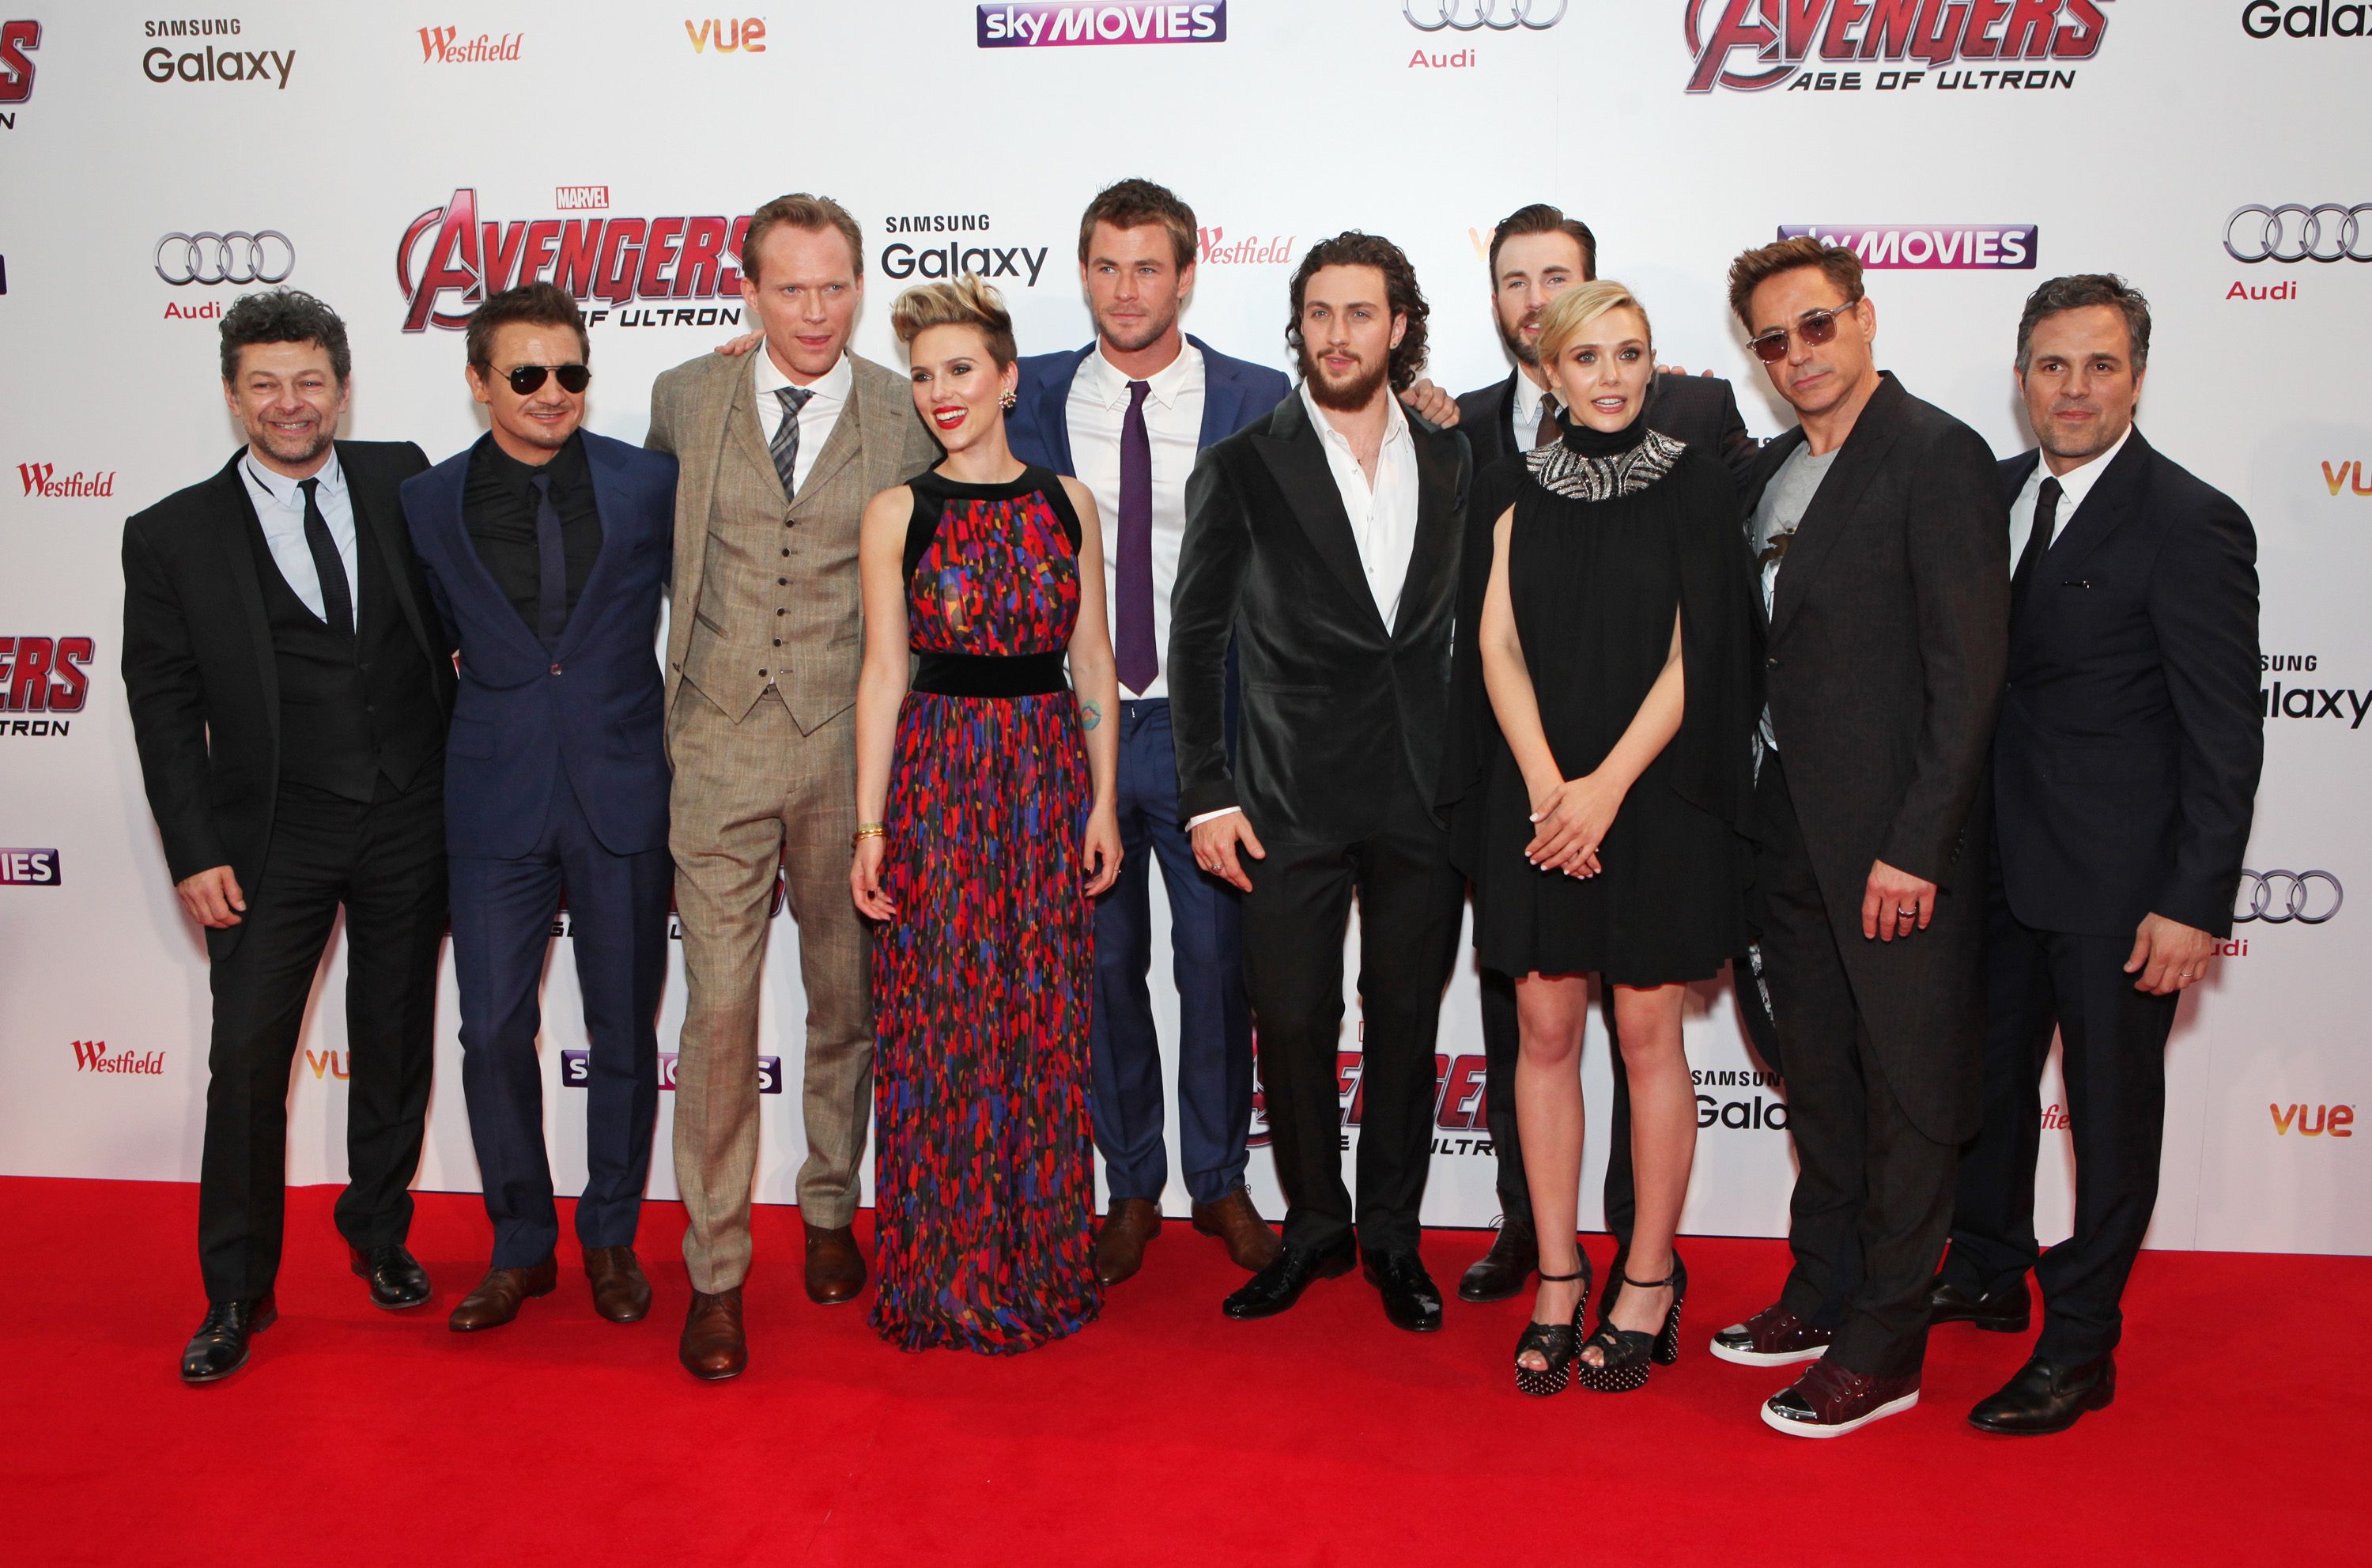 Avengers Cast